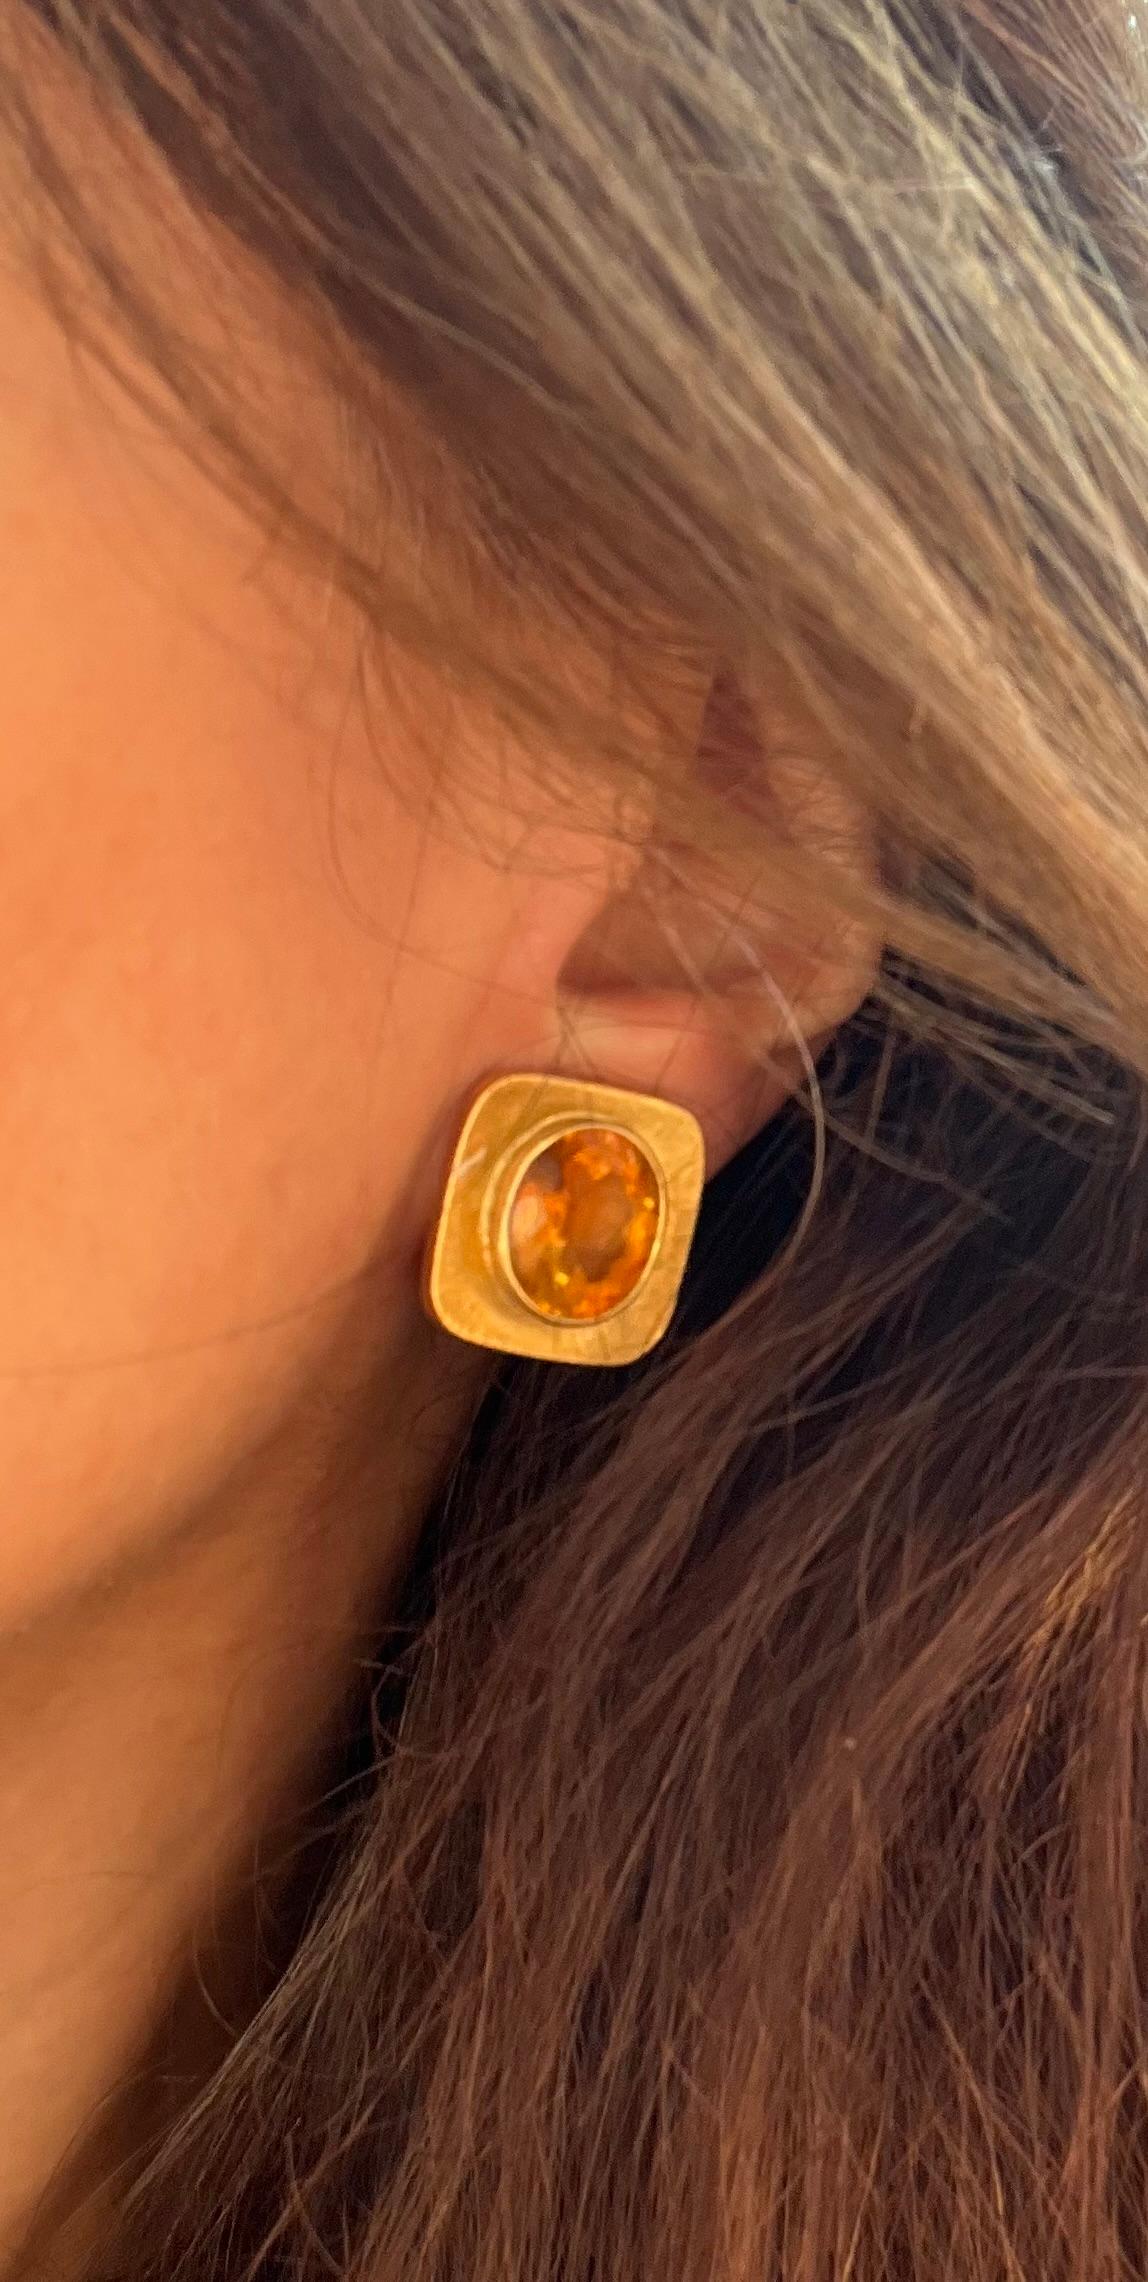 burle marx earrings